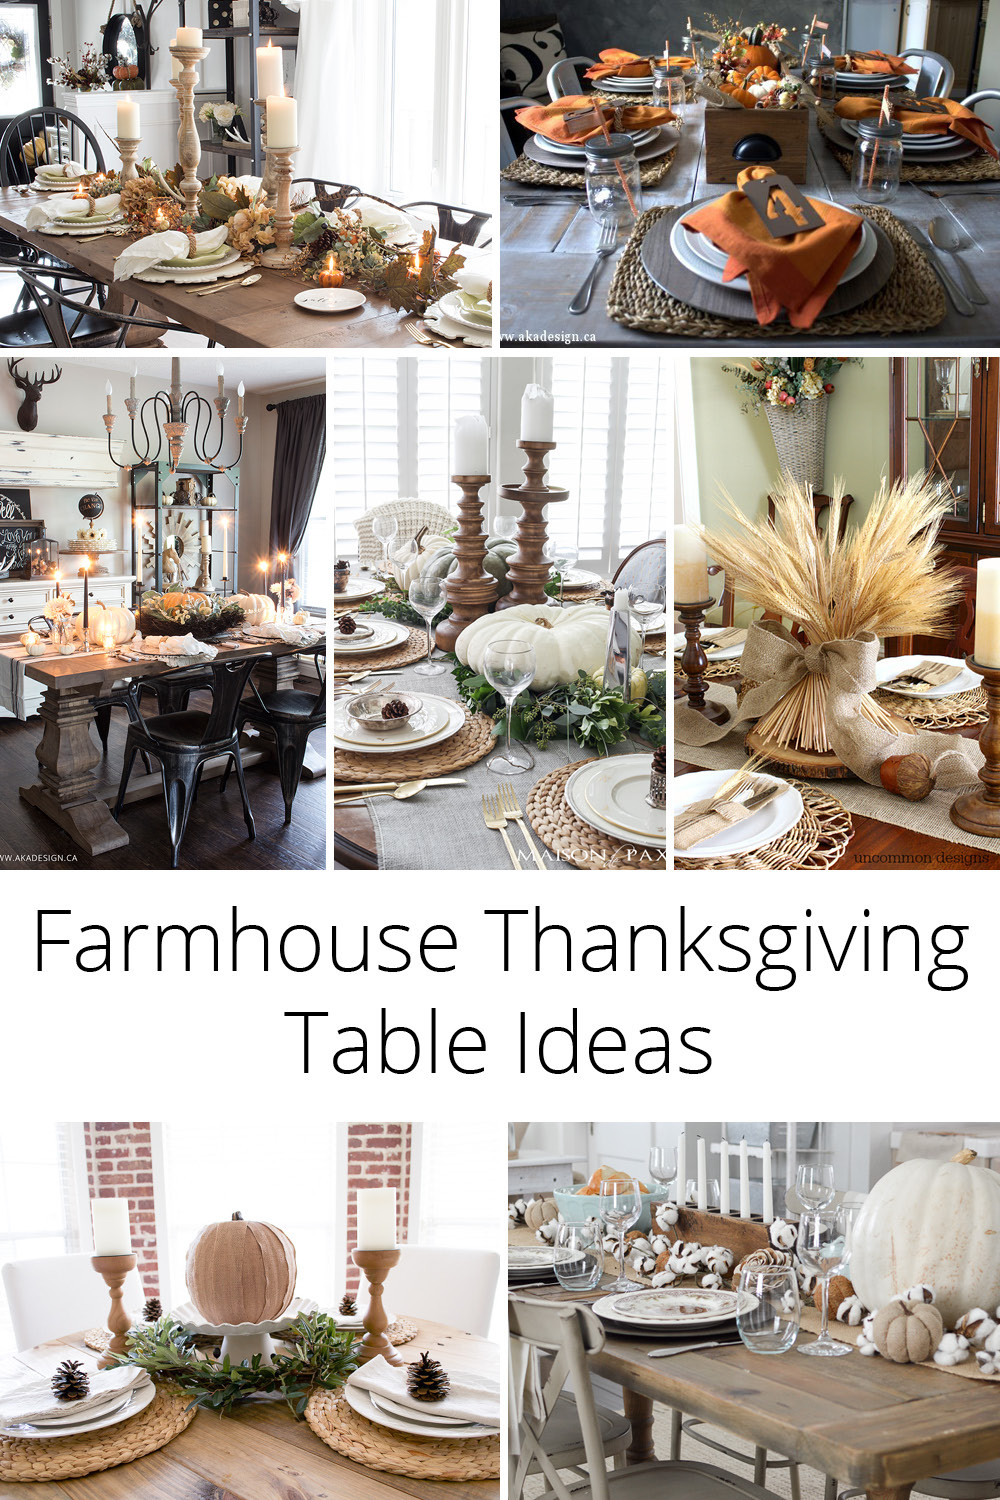 Pinterest Thanksgiving Table Ideas
 13 Farmhouse Thanksgiving Table Ideas to Help You Decorate